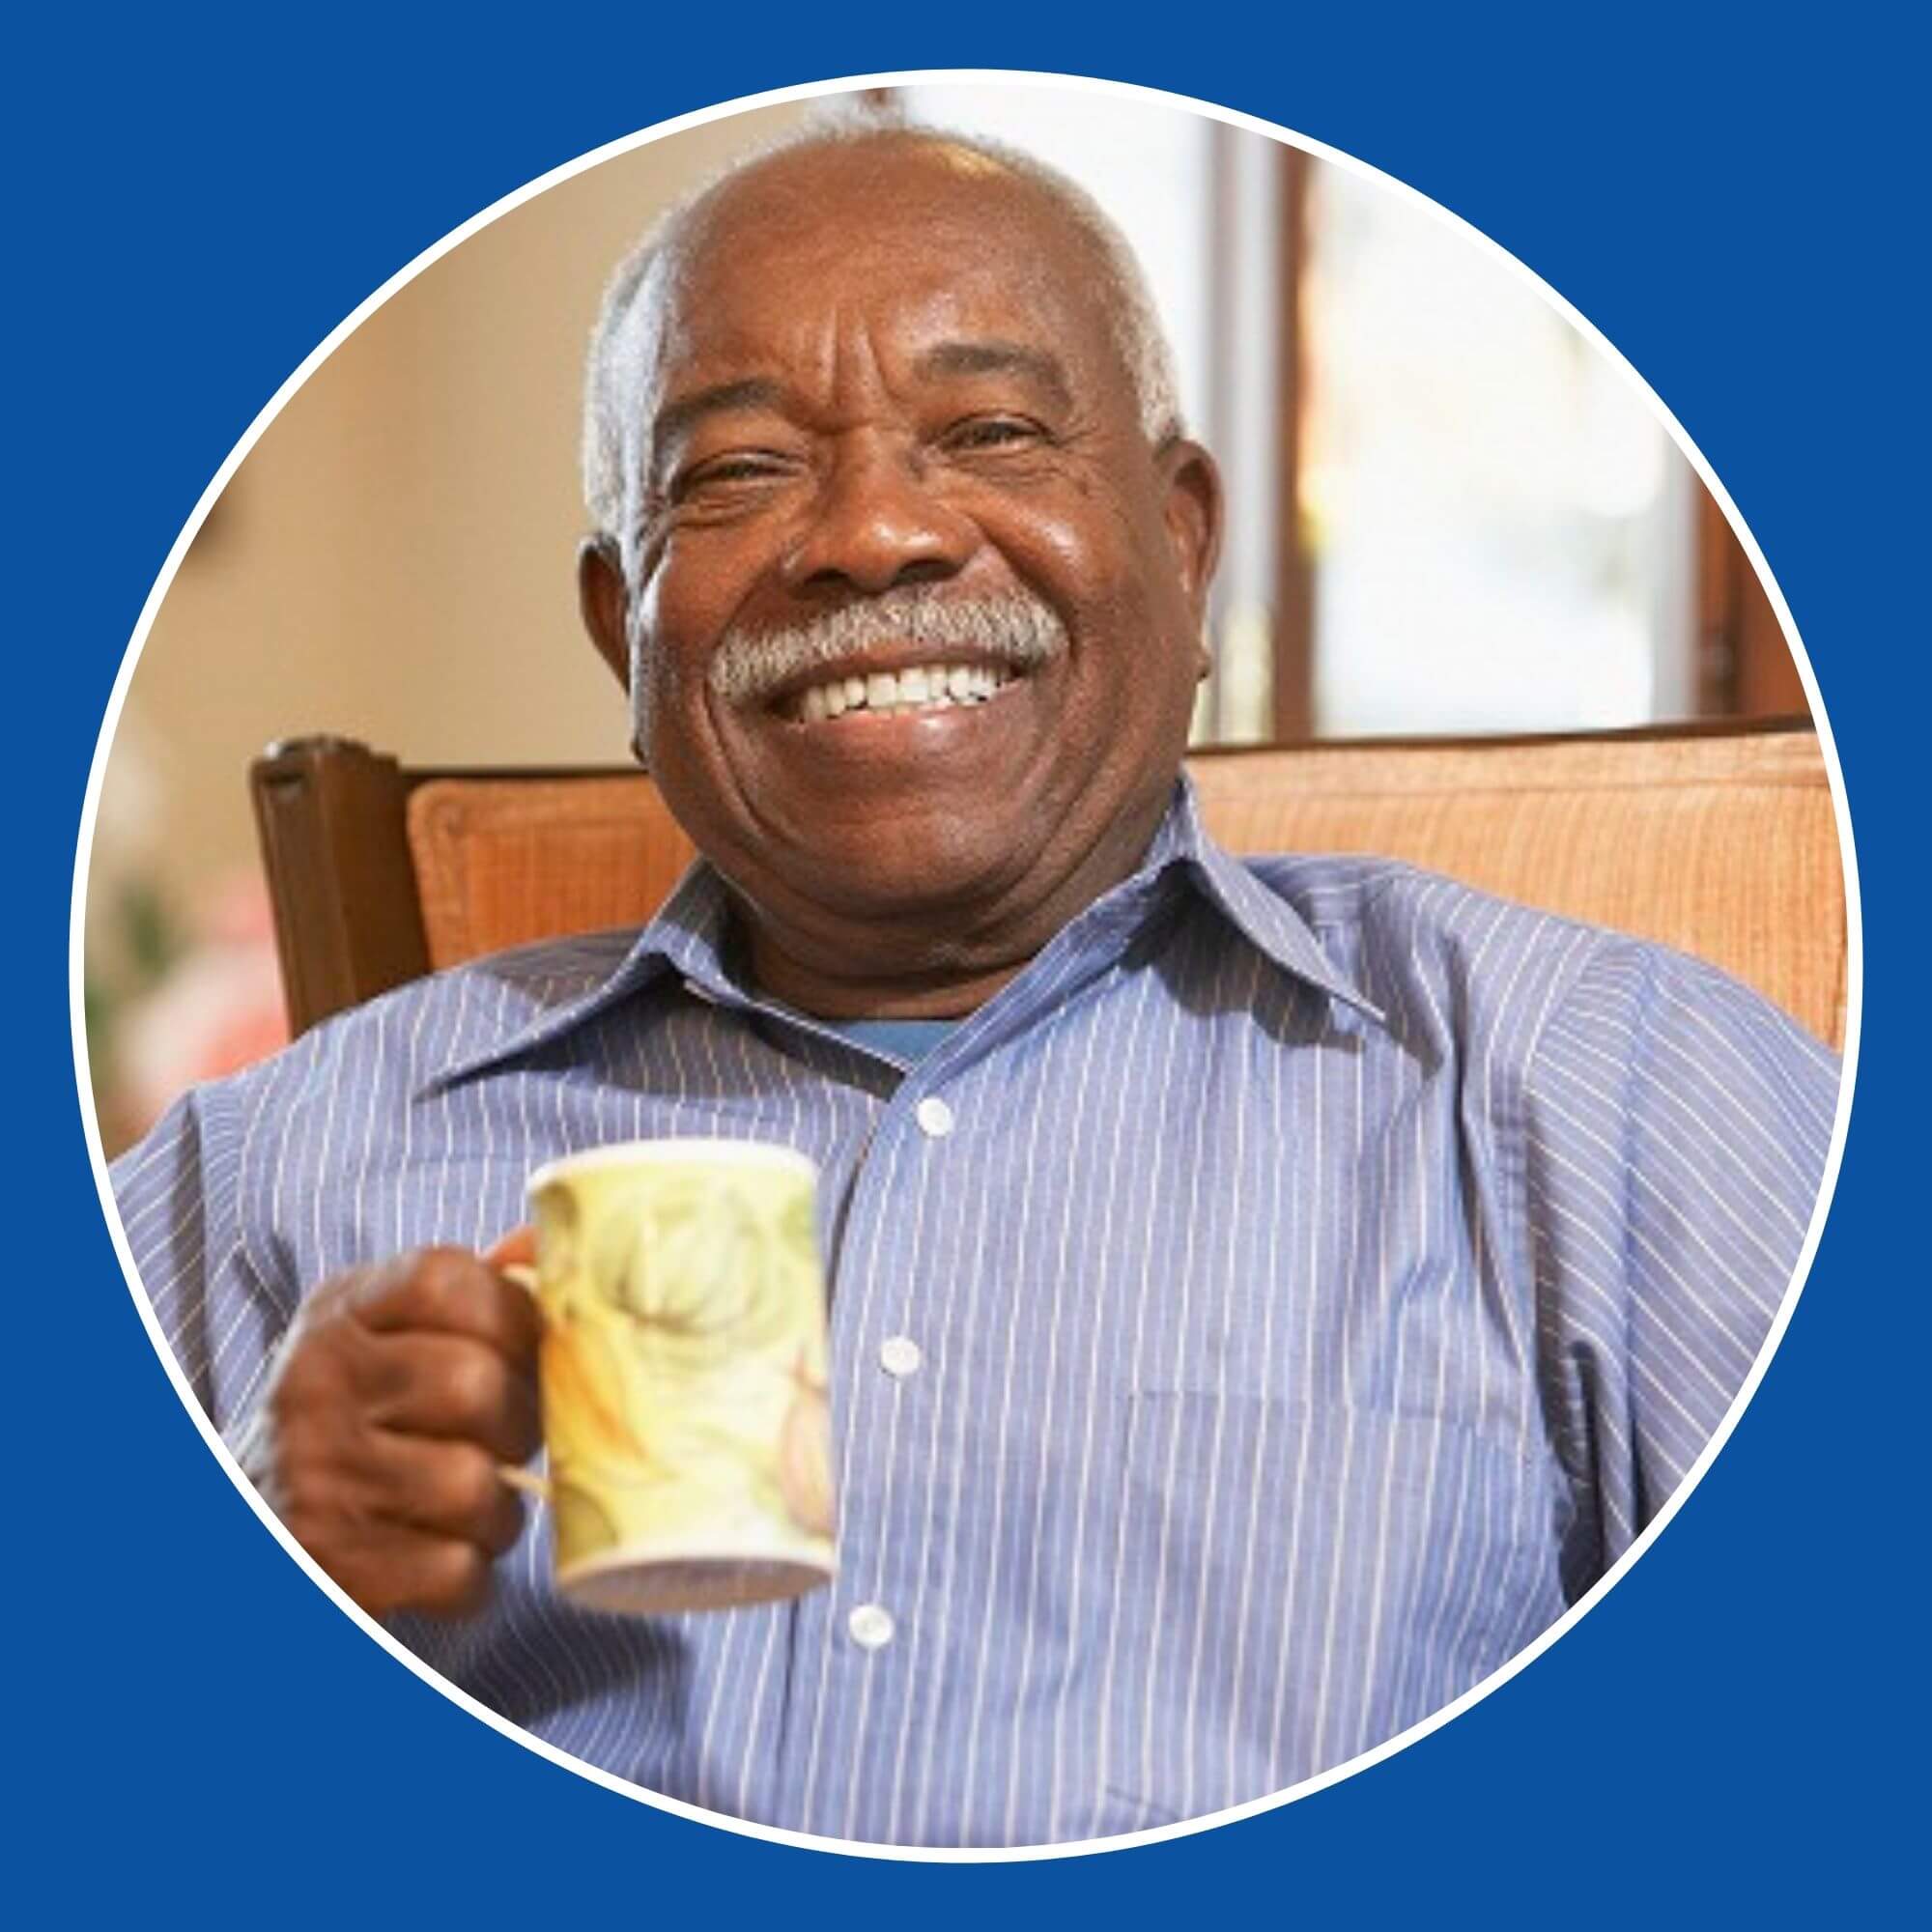 A happy elderly gentleman smiling in his chair